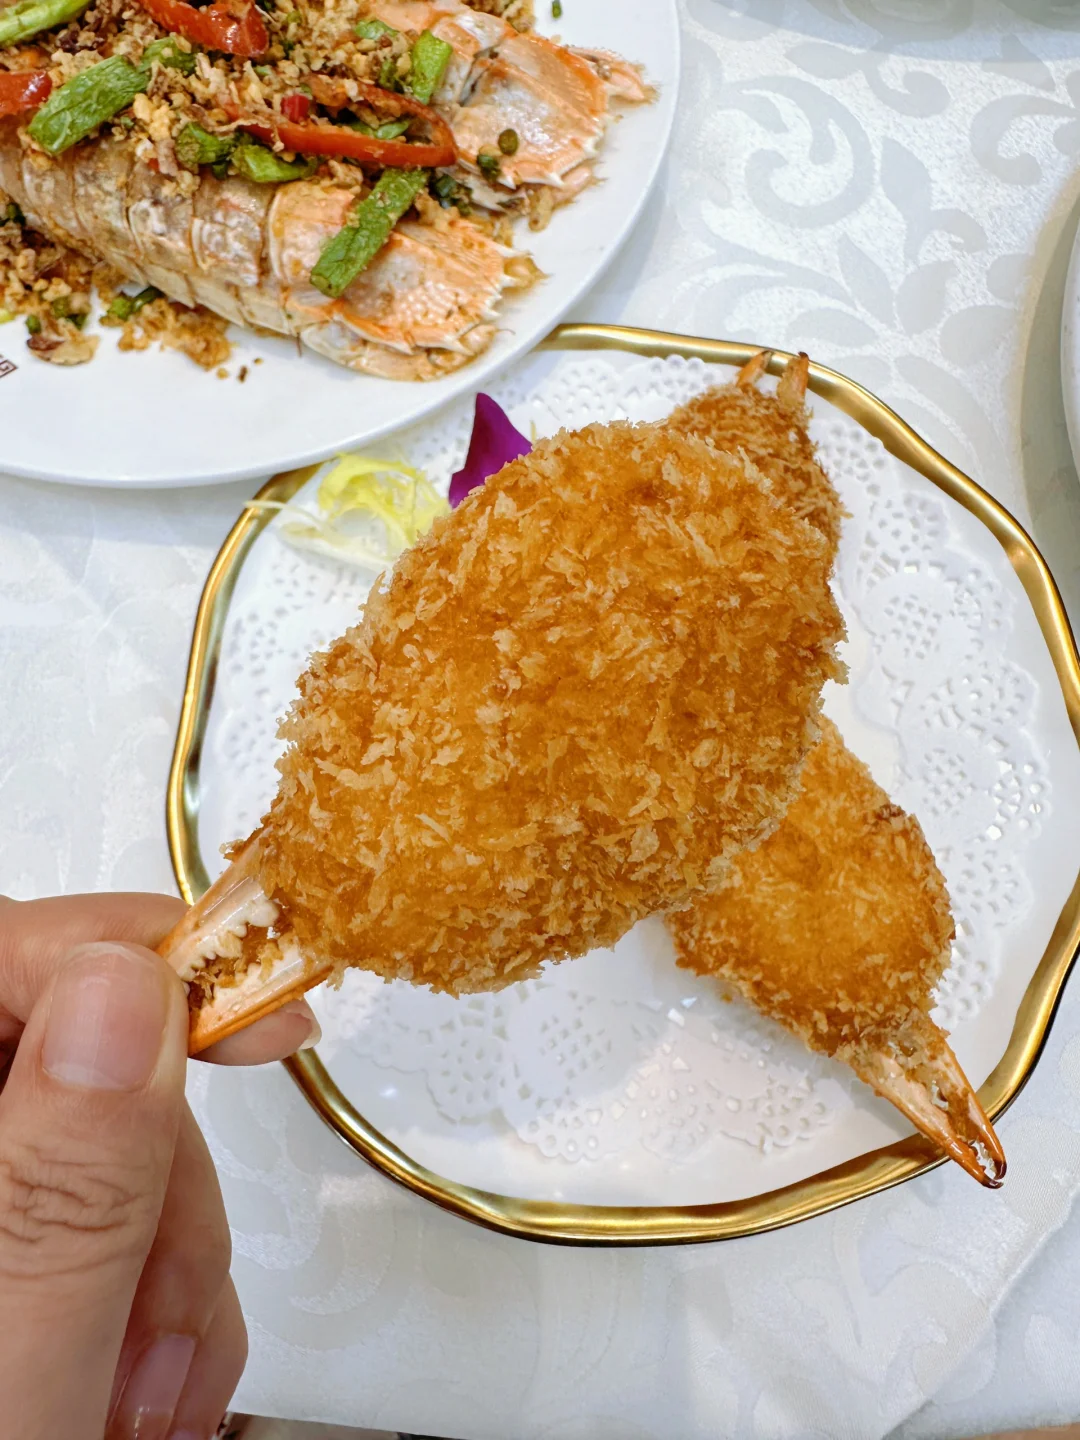 Macao-Macau's Li Ji Shark's Fin Restaurant, where Hong Kong star Charmaine Sheh often eats